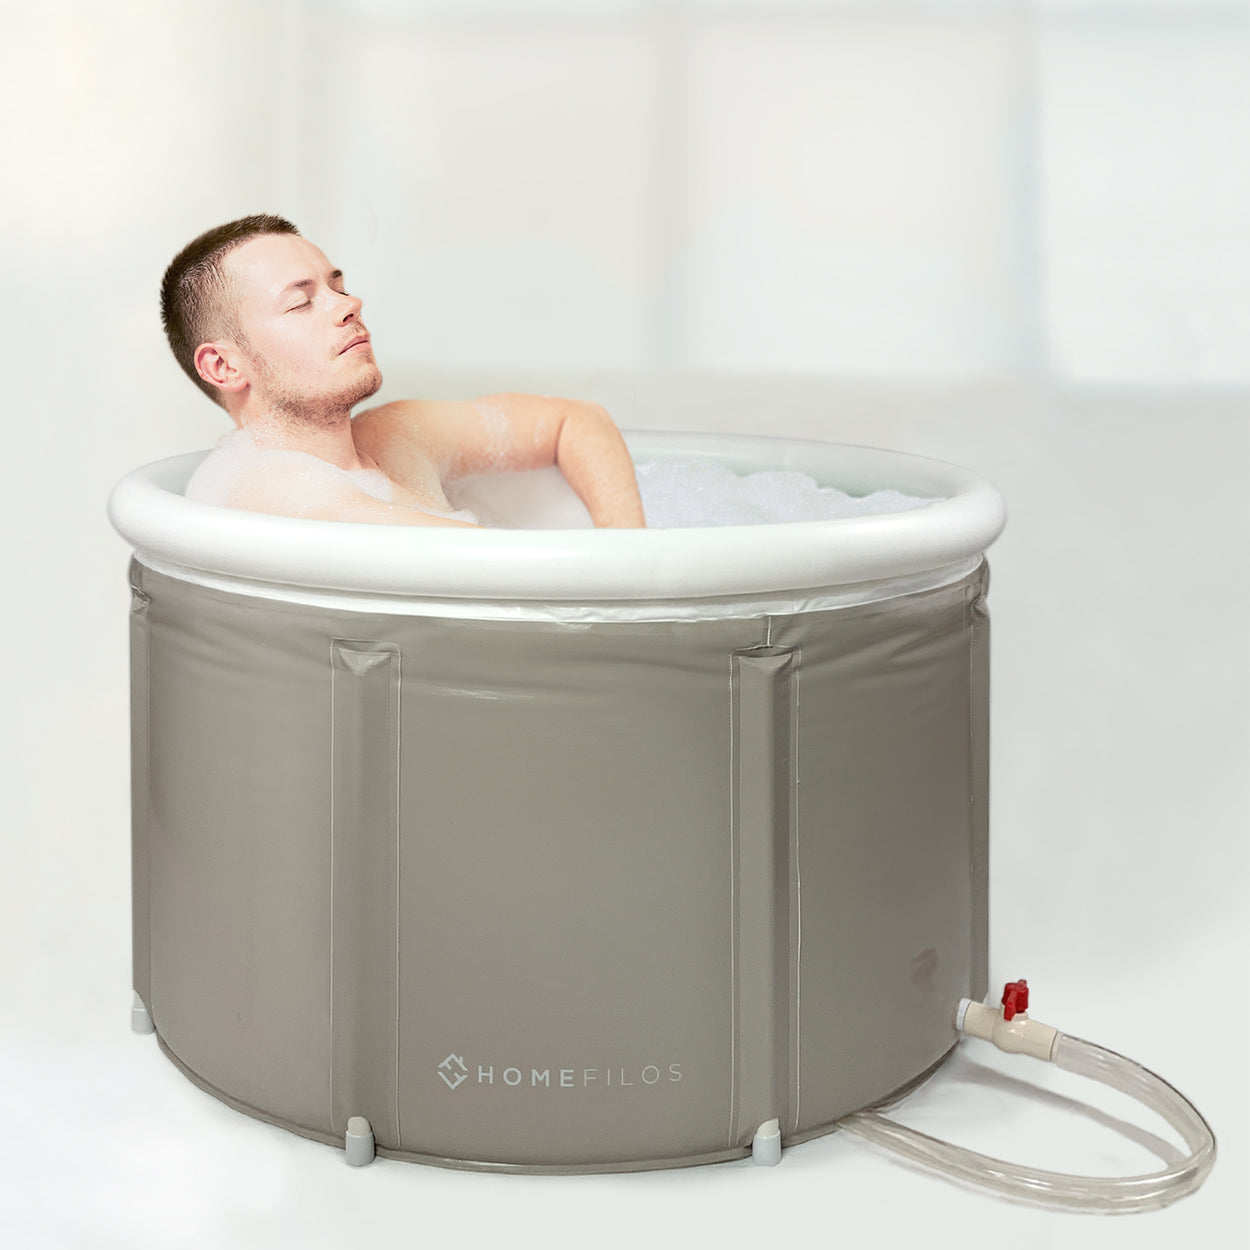 Portable Bathtub (LARGE) by Homefilos, Japanese Soaking Bath Tub for S